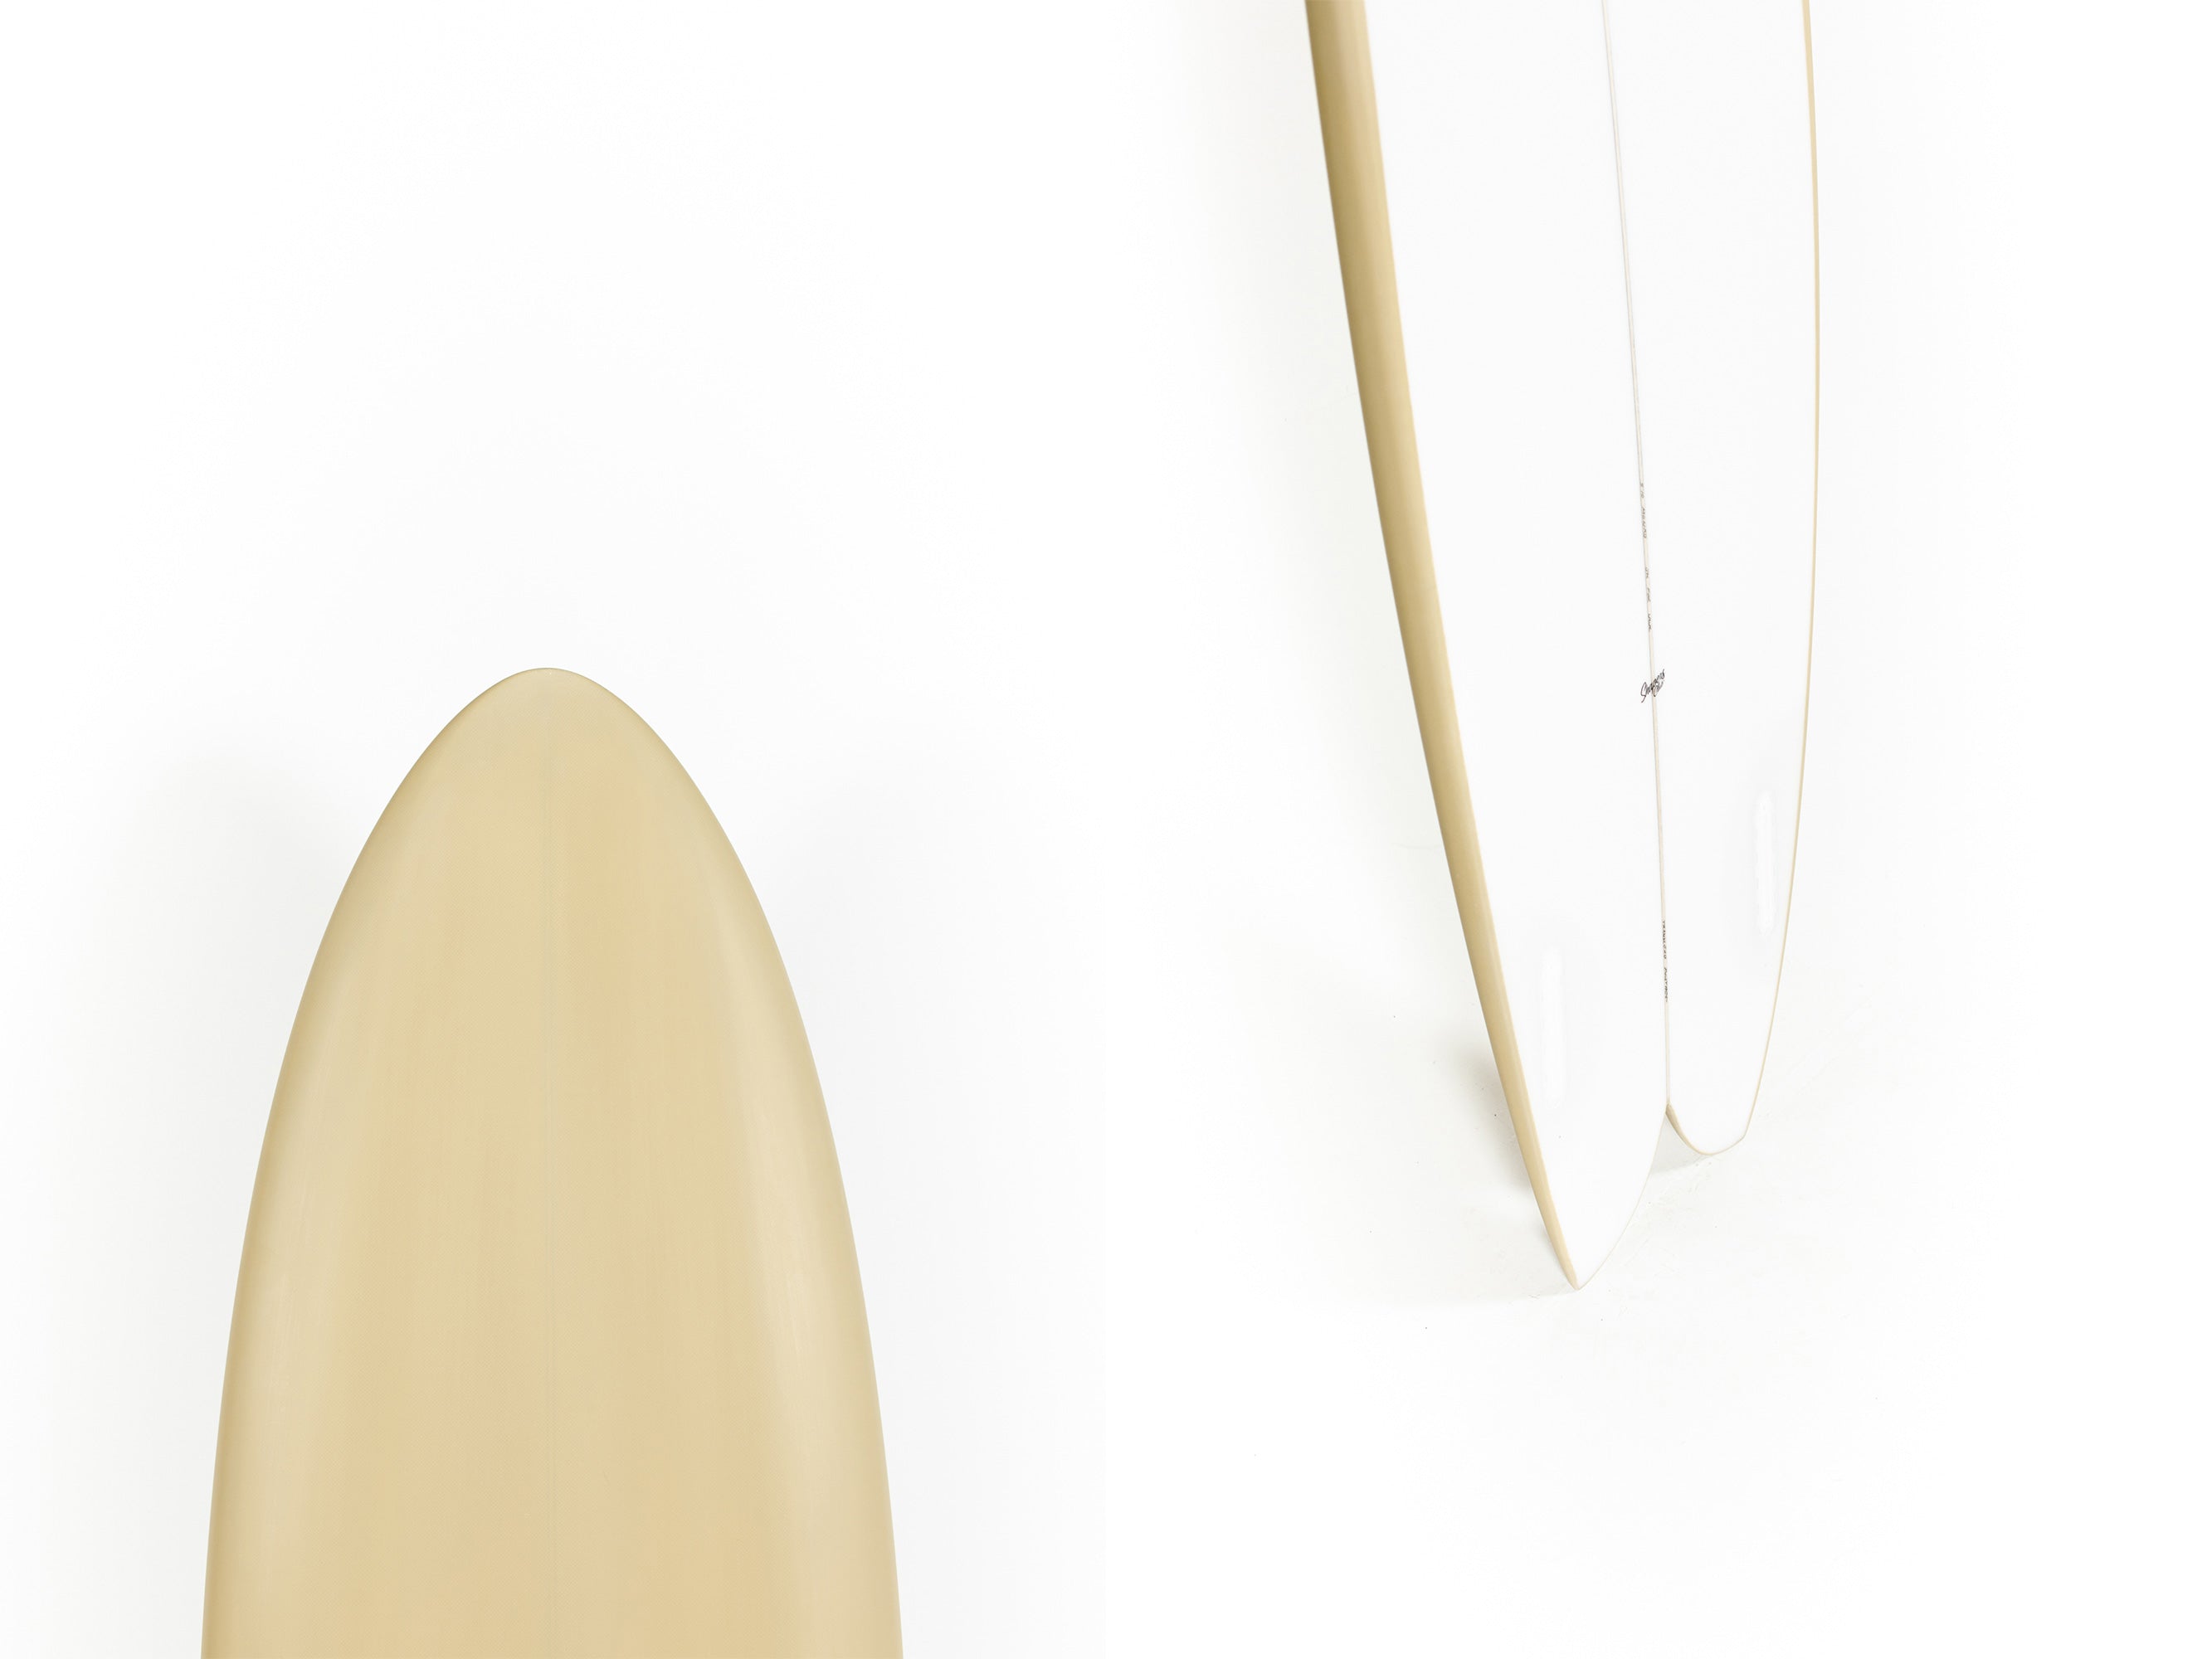 Pukas Surf Shop - Monad Joshua Keogh Surfboards